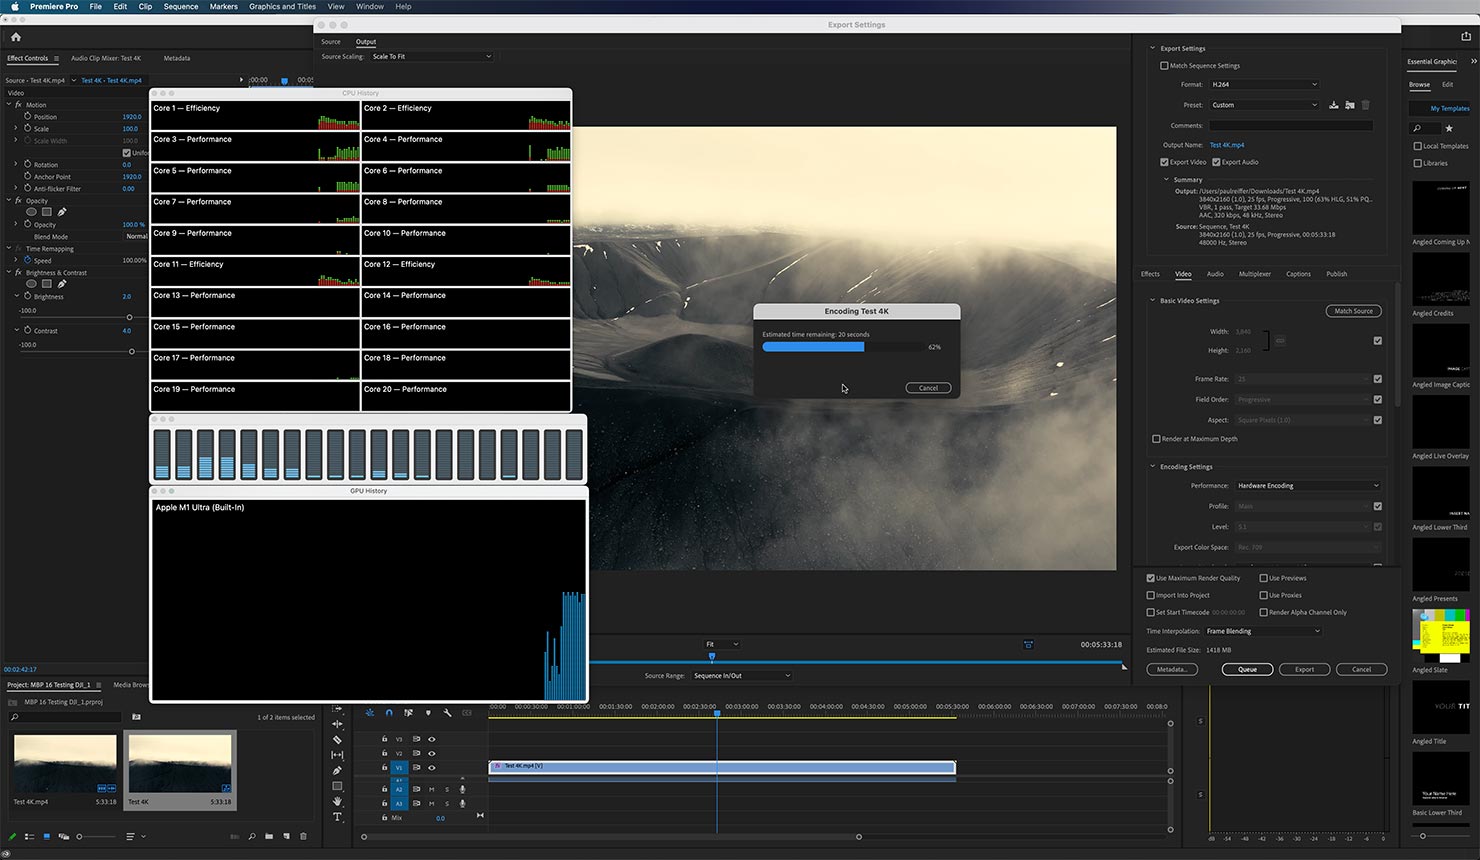 Adobe Premiere Pro Apple Mac Studio M1 Ultra Export Test 4K HDR VBR Speed Footage Grading Media Encoder Output Comparison Paul Reiffer